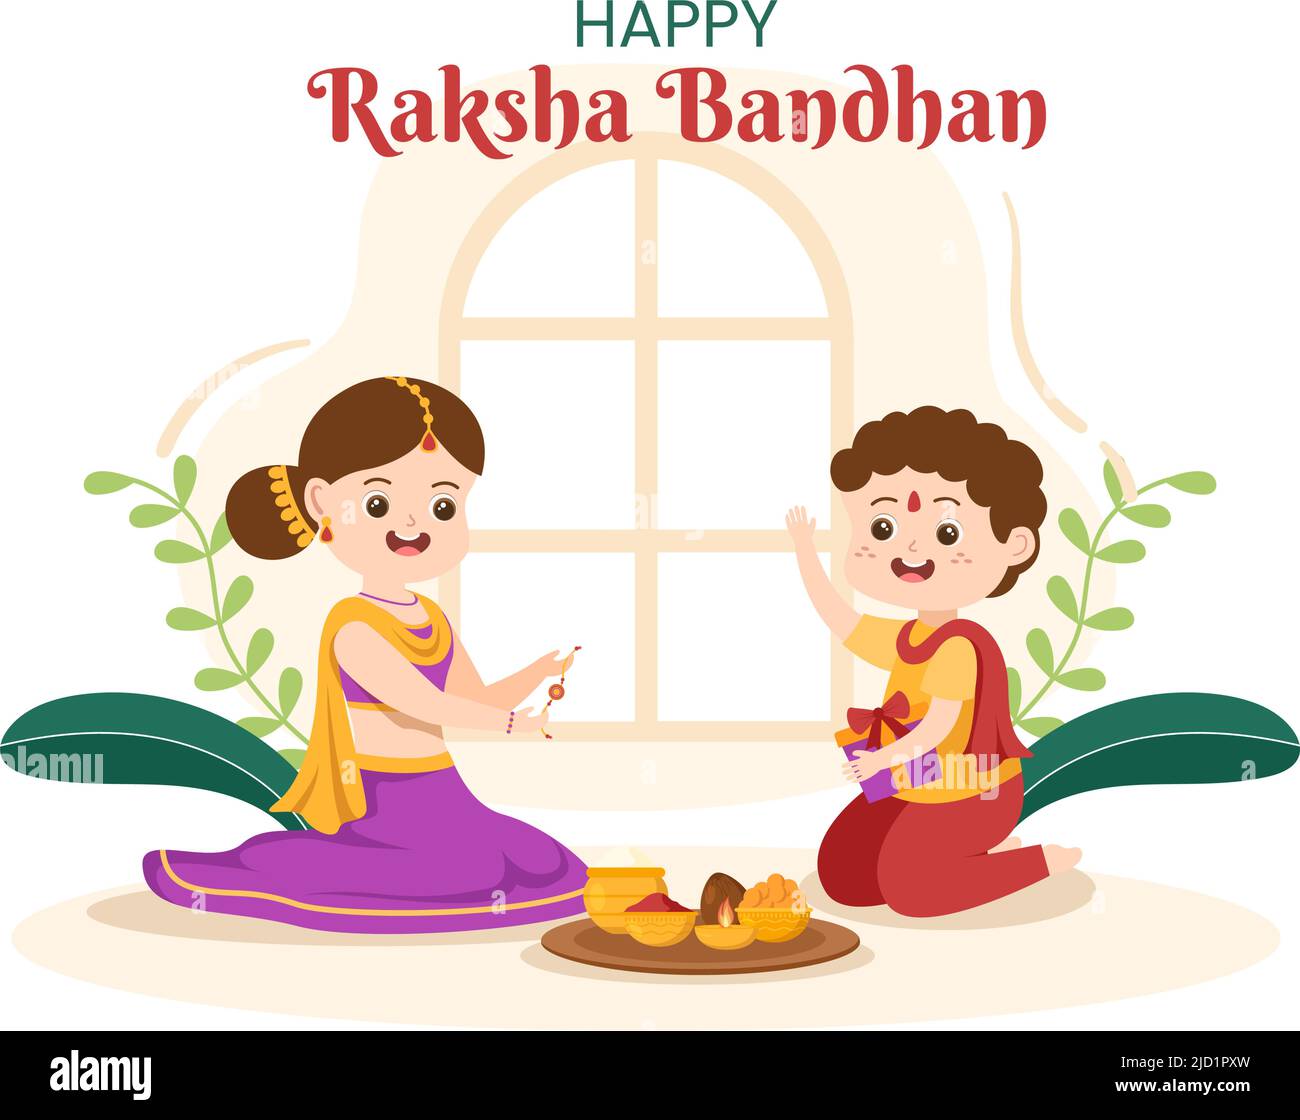 Raksha bandhan Cut Out Stock Images & Pictures - Alamy